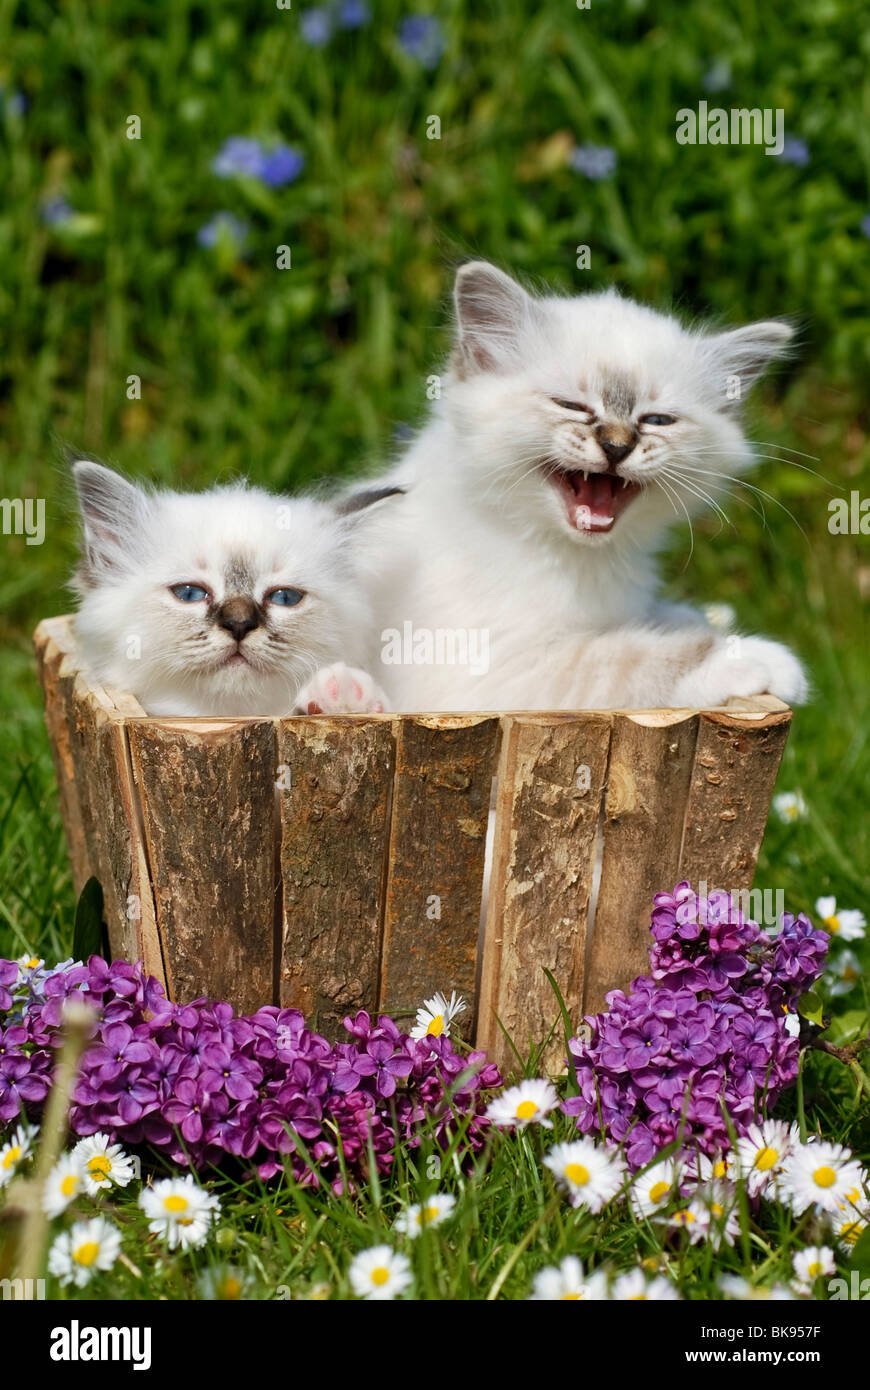 Two Birman kittens in a planter Stock Photo